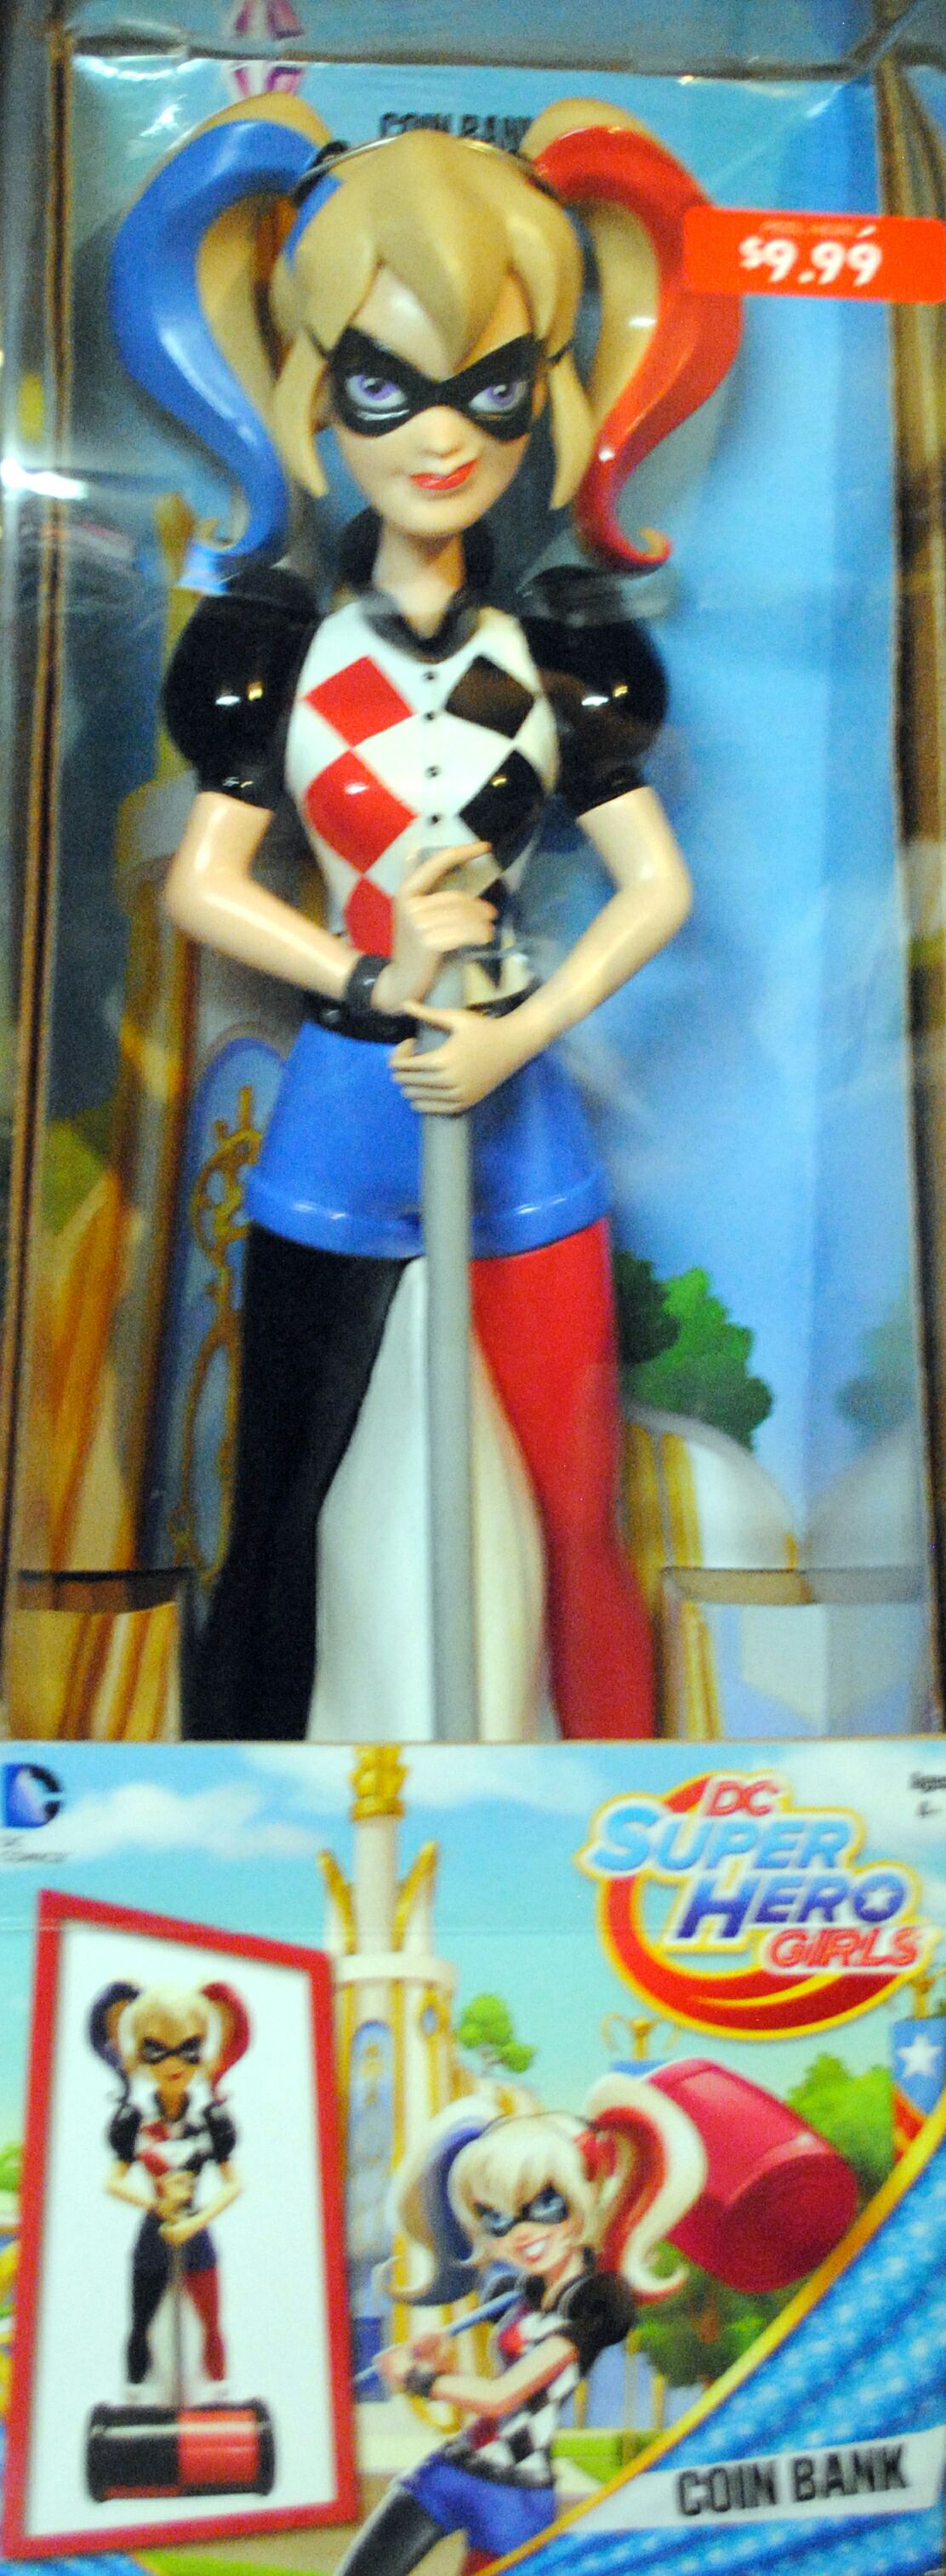 Konosuba (Kazuya) - DC Mattel (DC Super Hero Girls) action figure collectible [Barcode 0049022897397] - Main Image 1